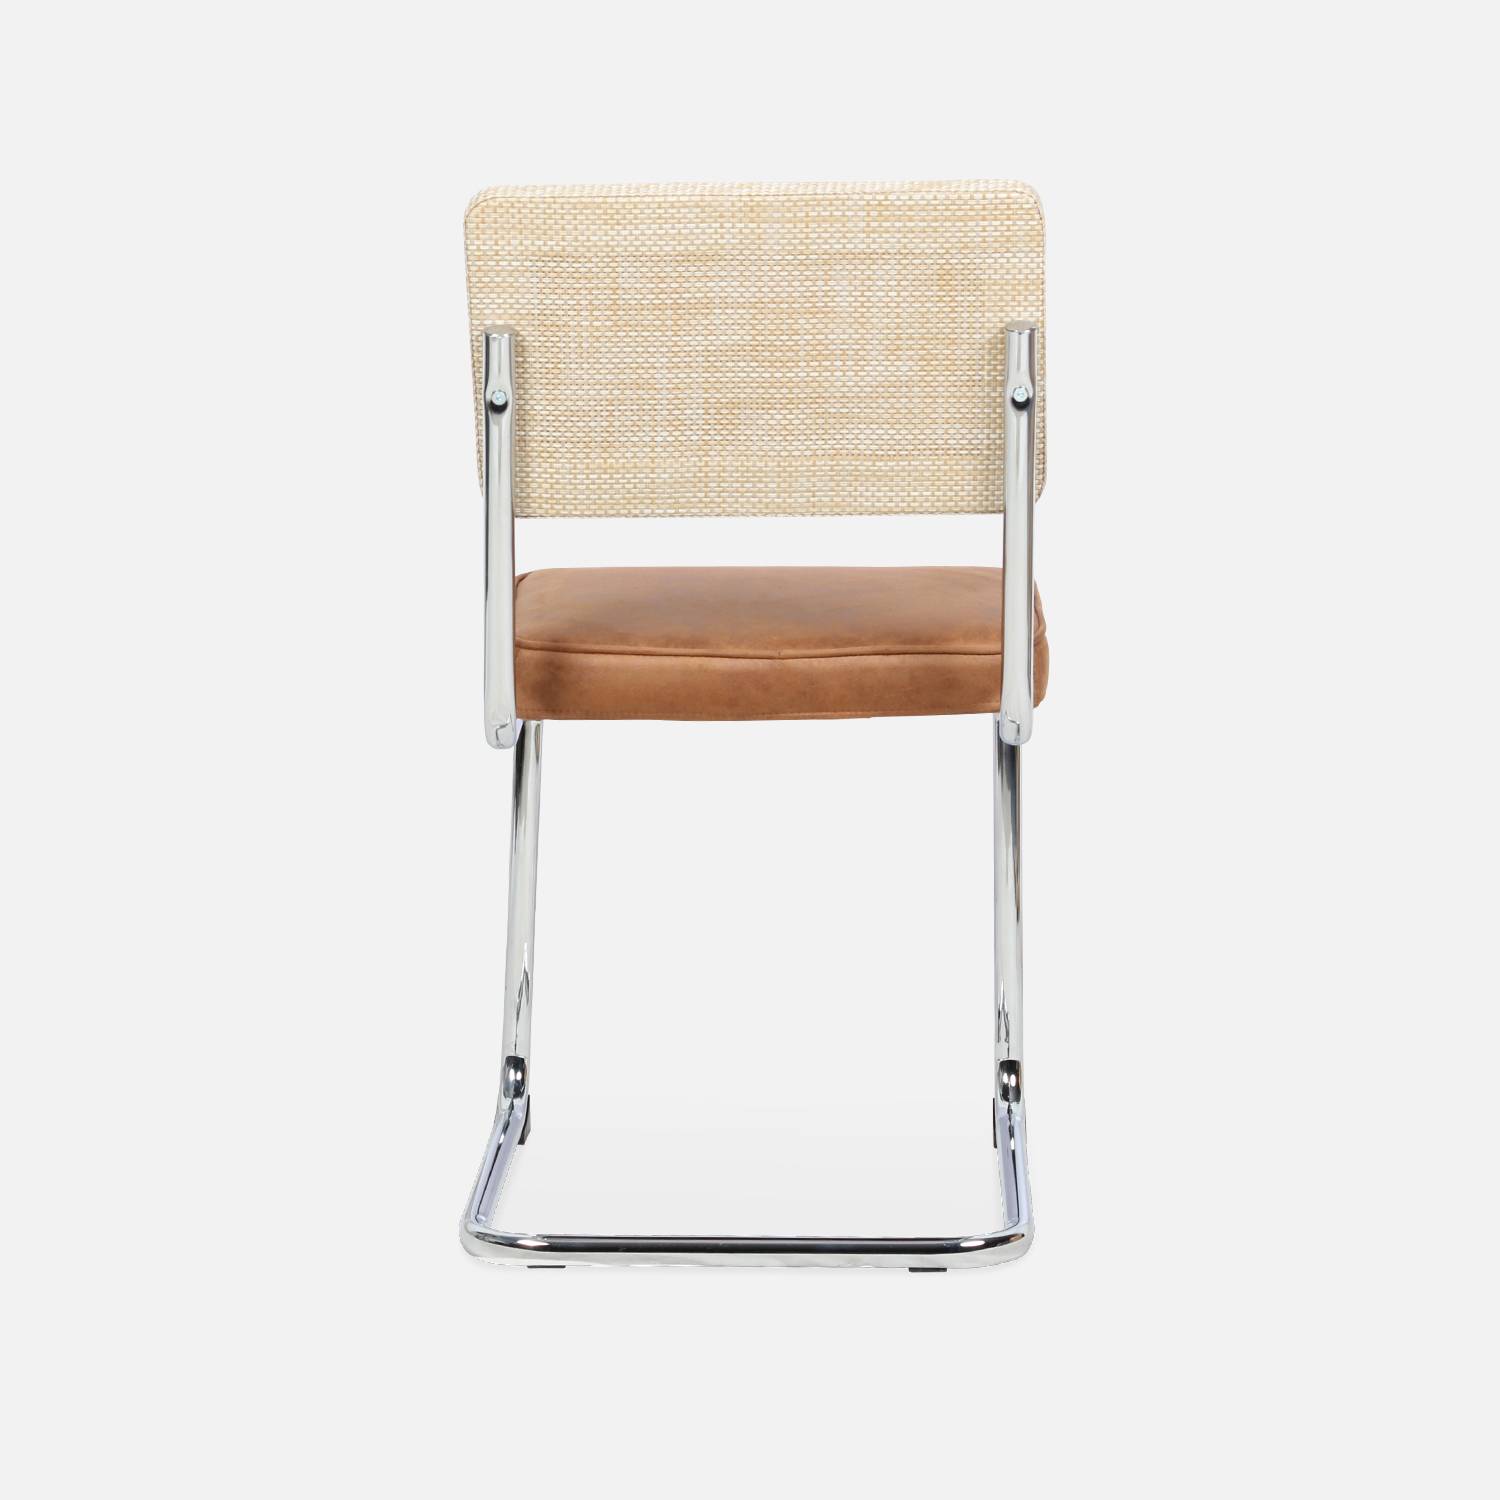 2 sillas cantilever - Maja - tela marrón claro y resina efecto ratán, 46 x 54,5 x 84,5cm  ,sweeek,Photo8